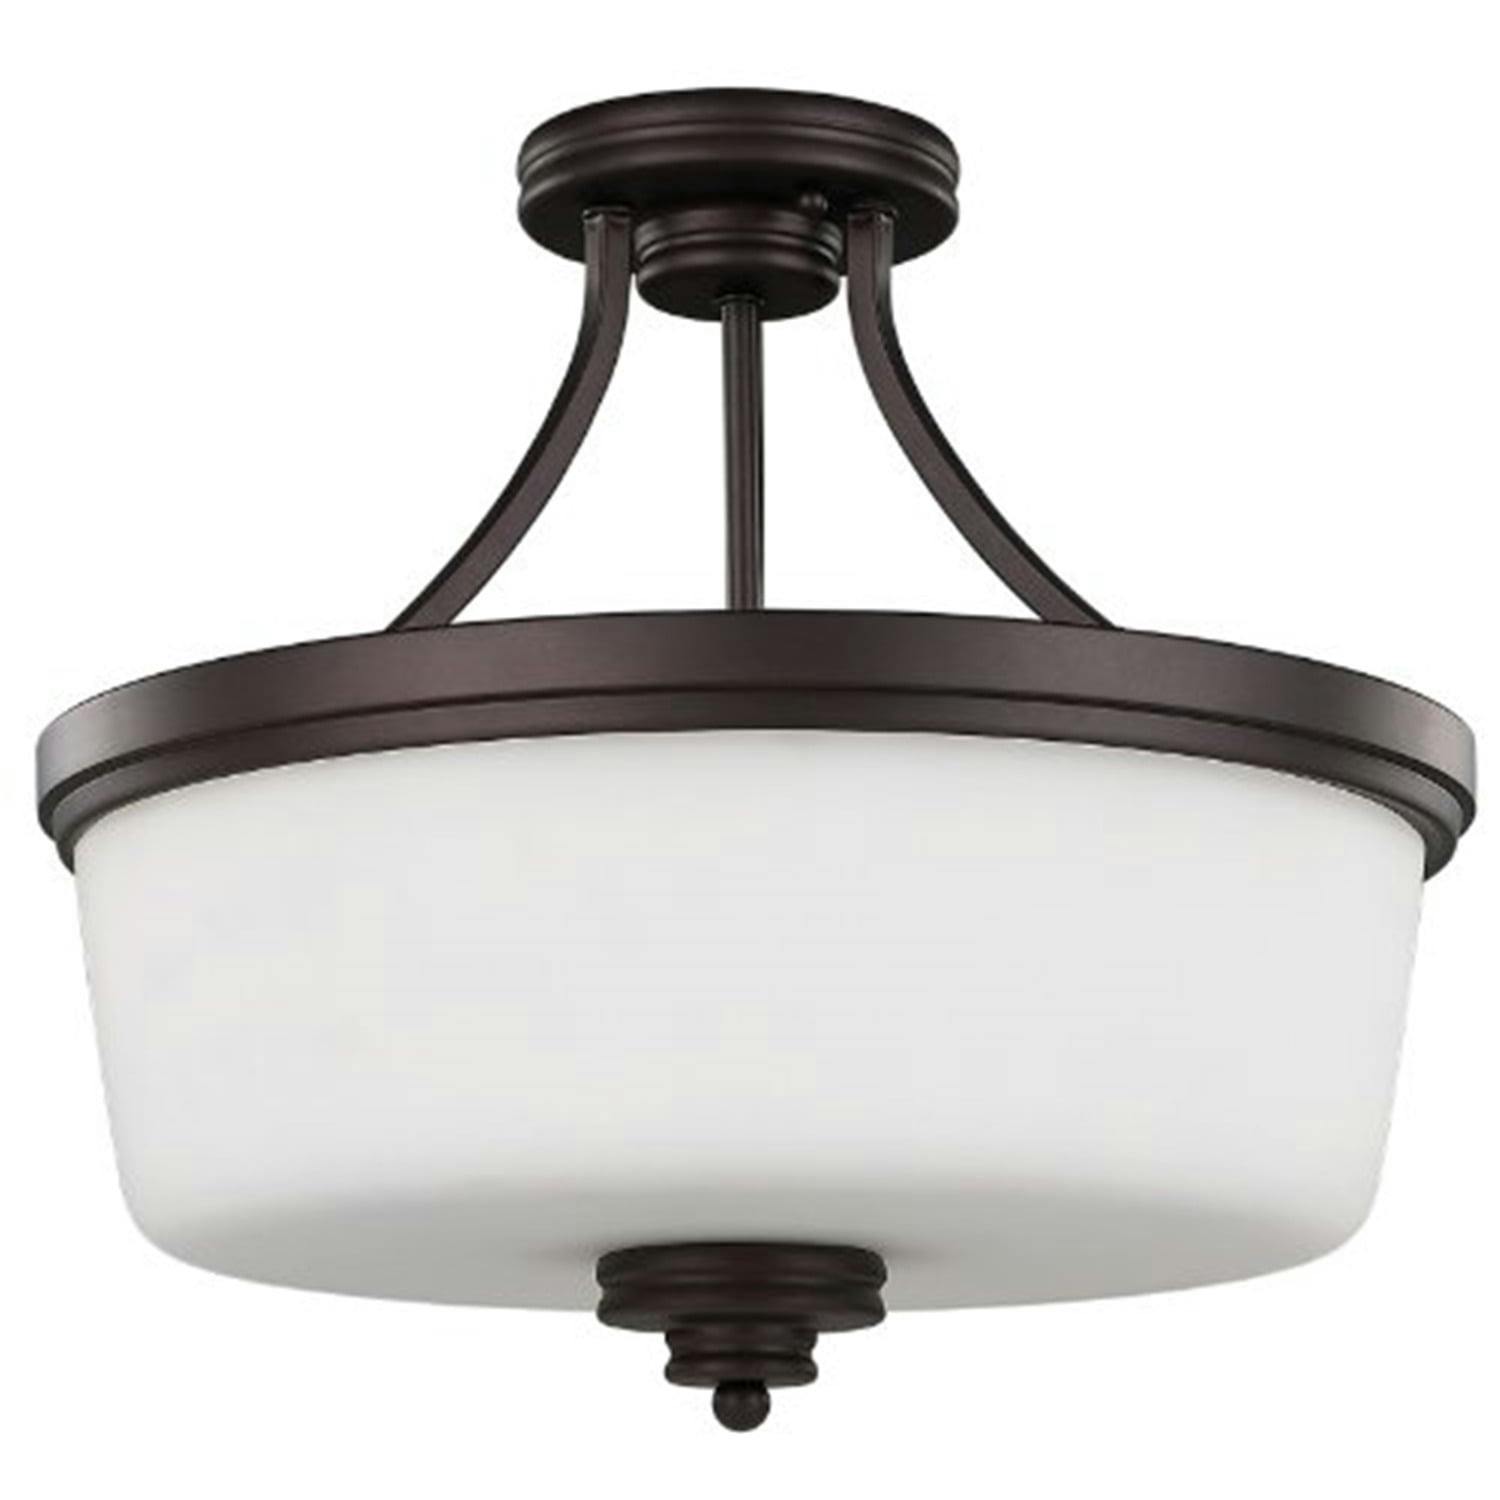 Elegant Jackson Bronze 15.75" Semi-Flush Bowl Ceiling Light with Opal Glass